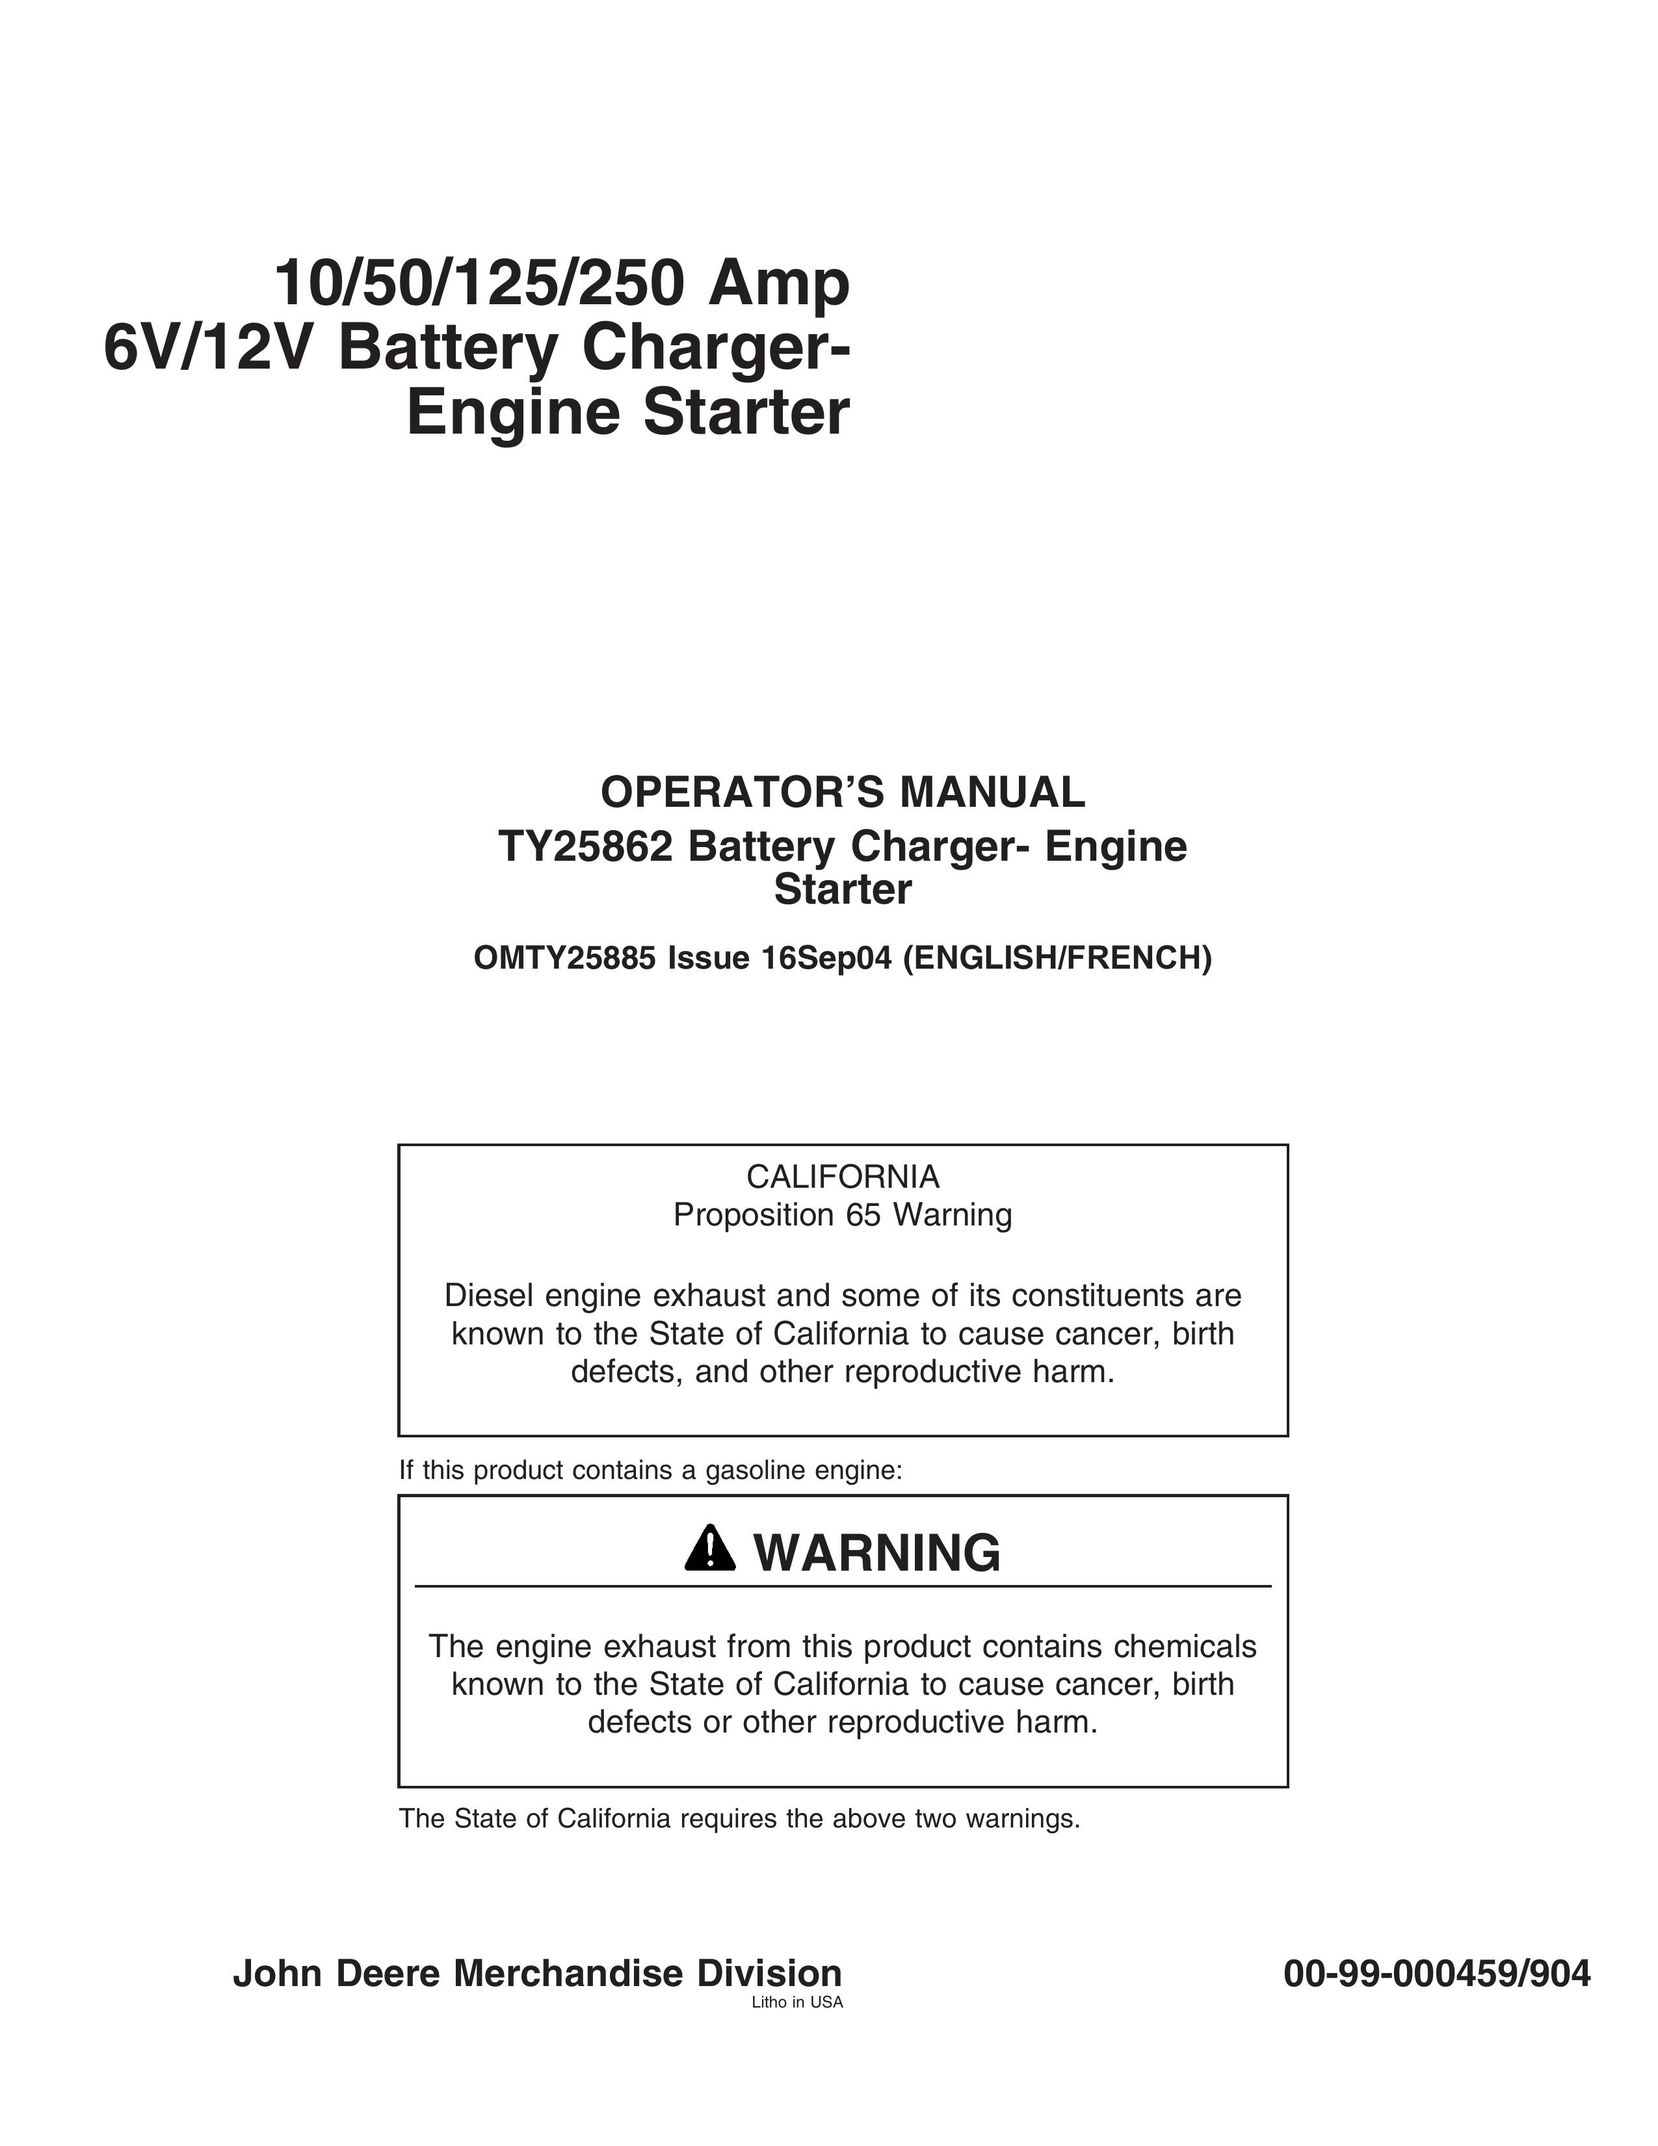 John Deere TY25862 Battery Charger User Manual